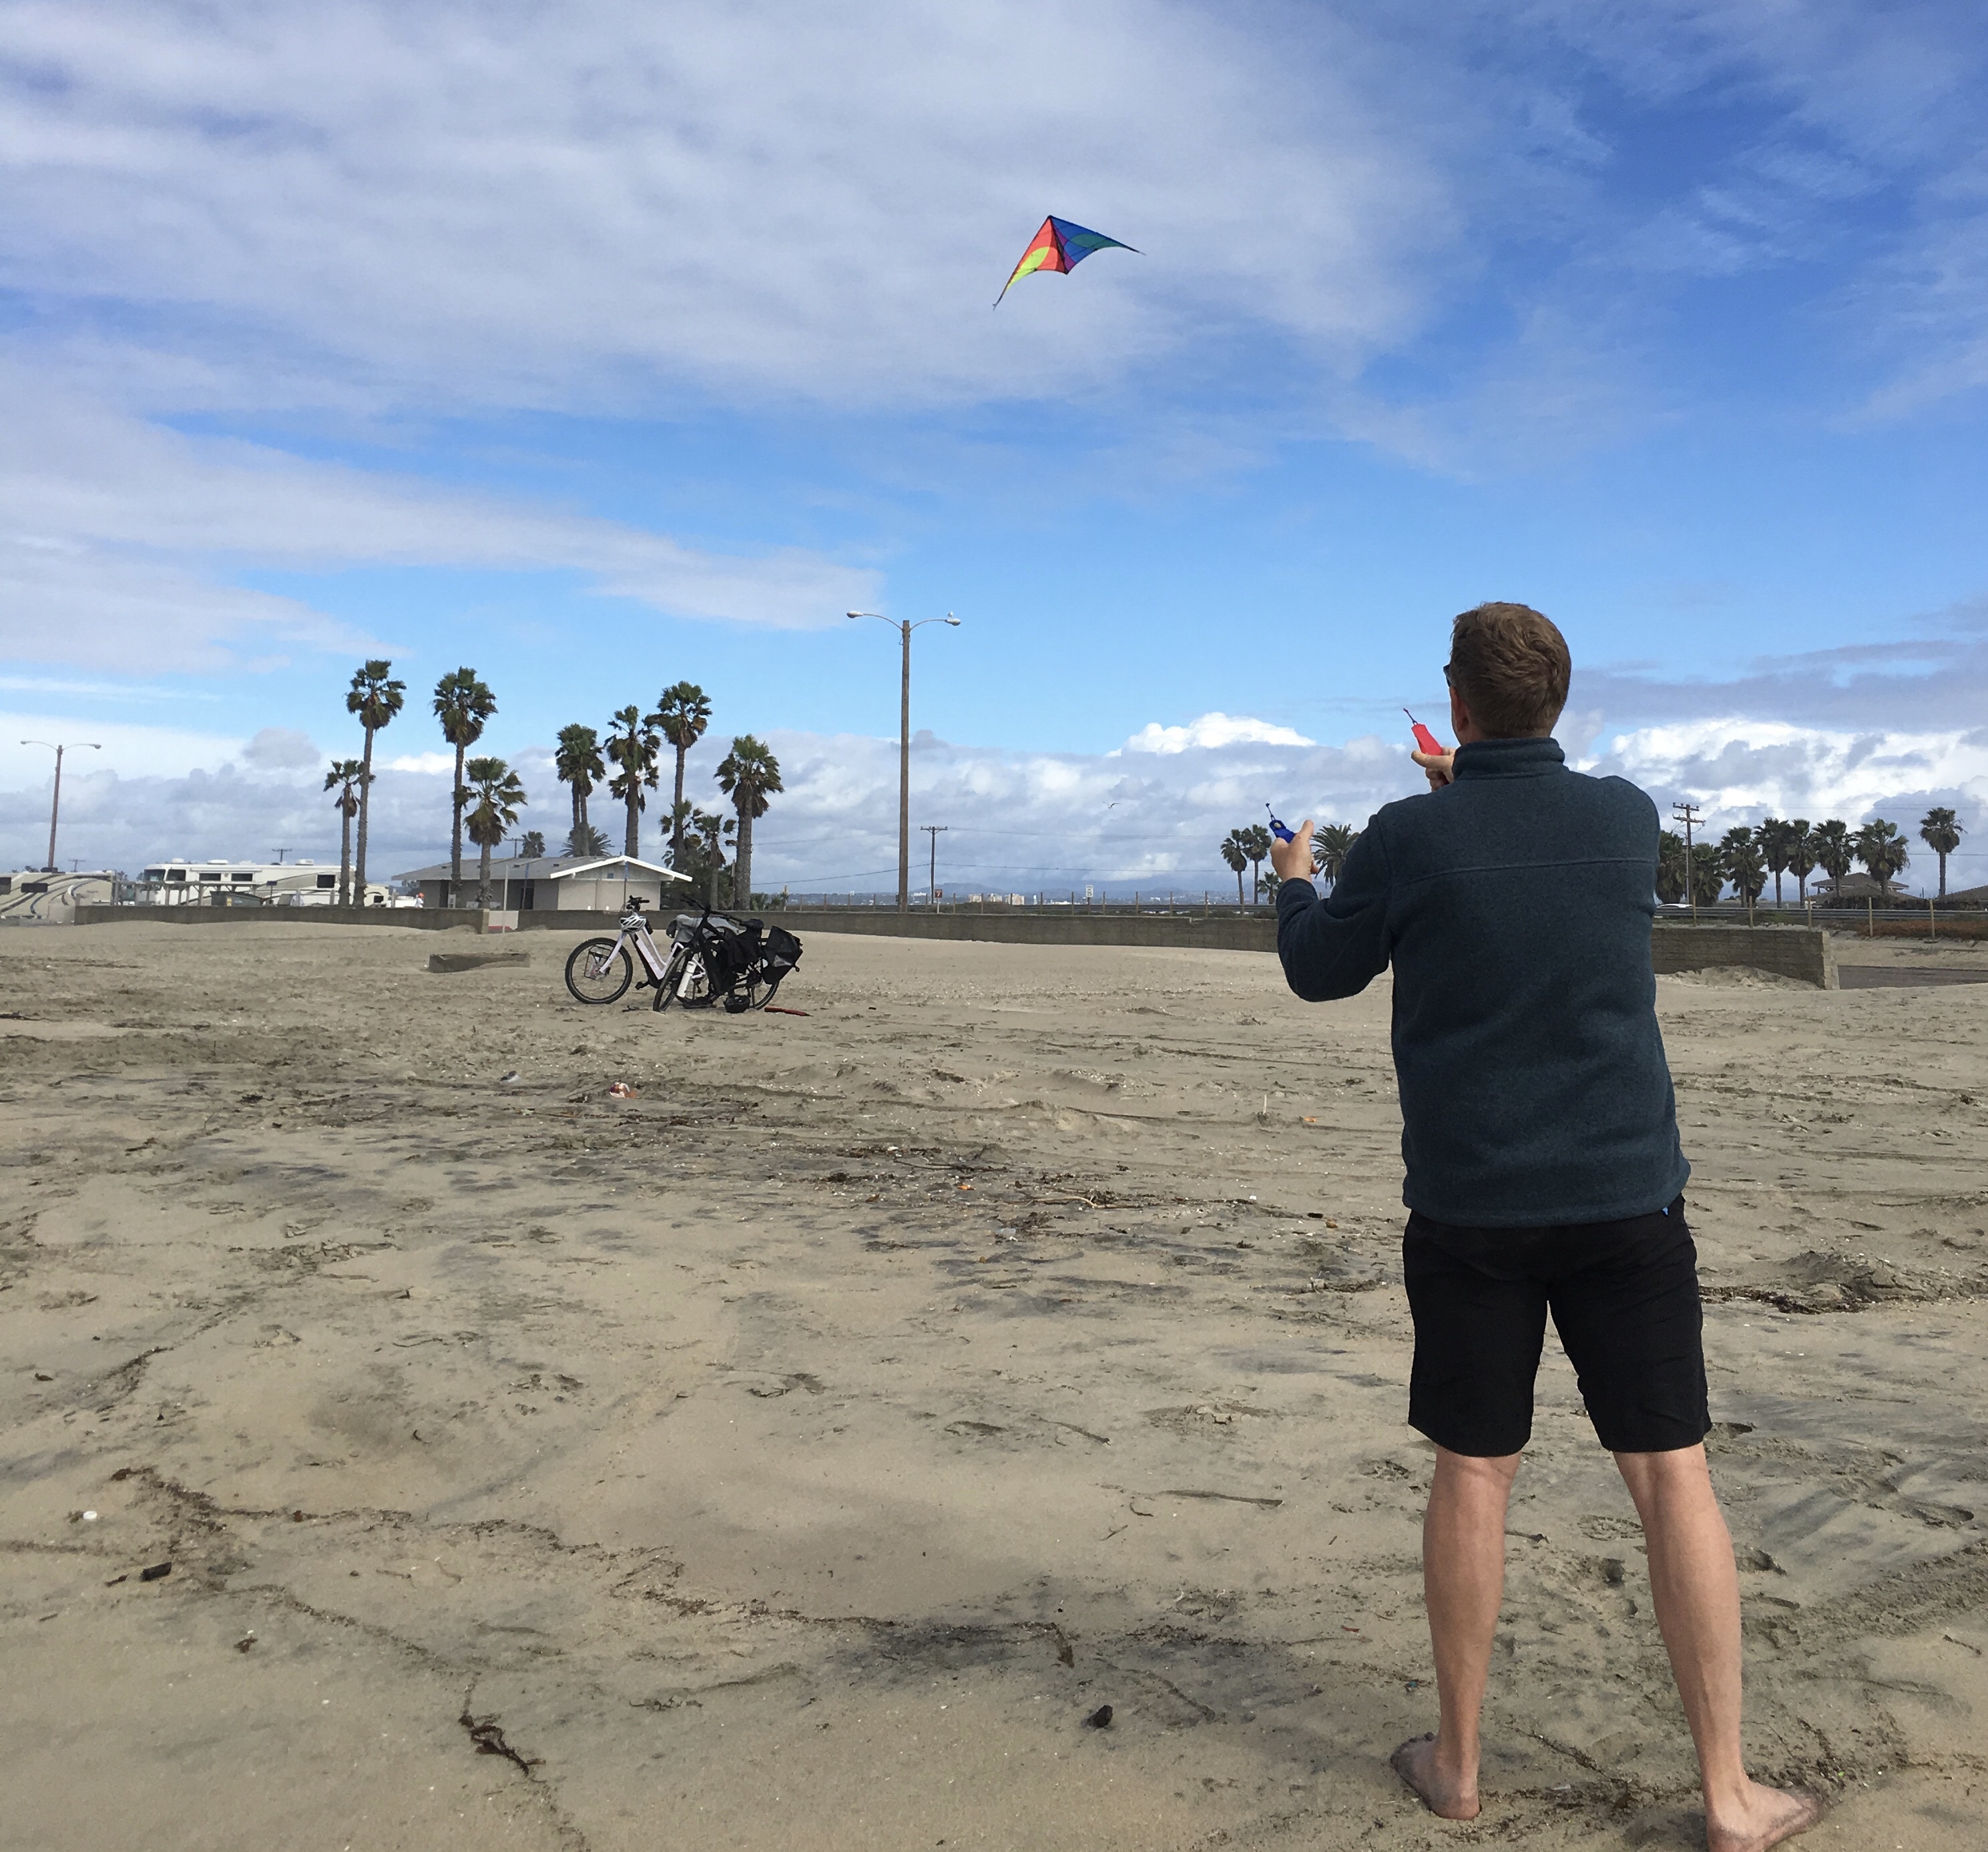 Let’s go fly a (stunt) kite